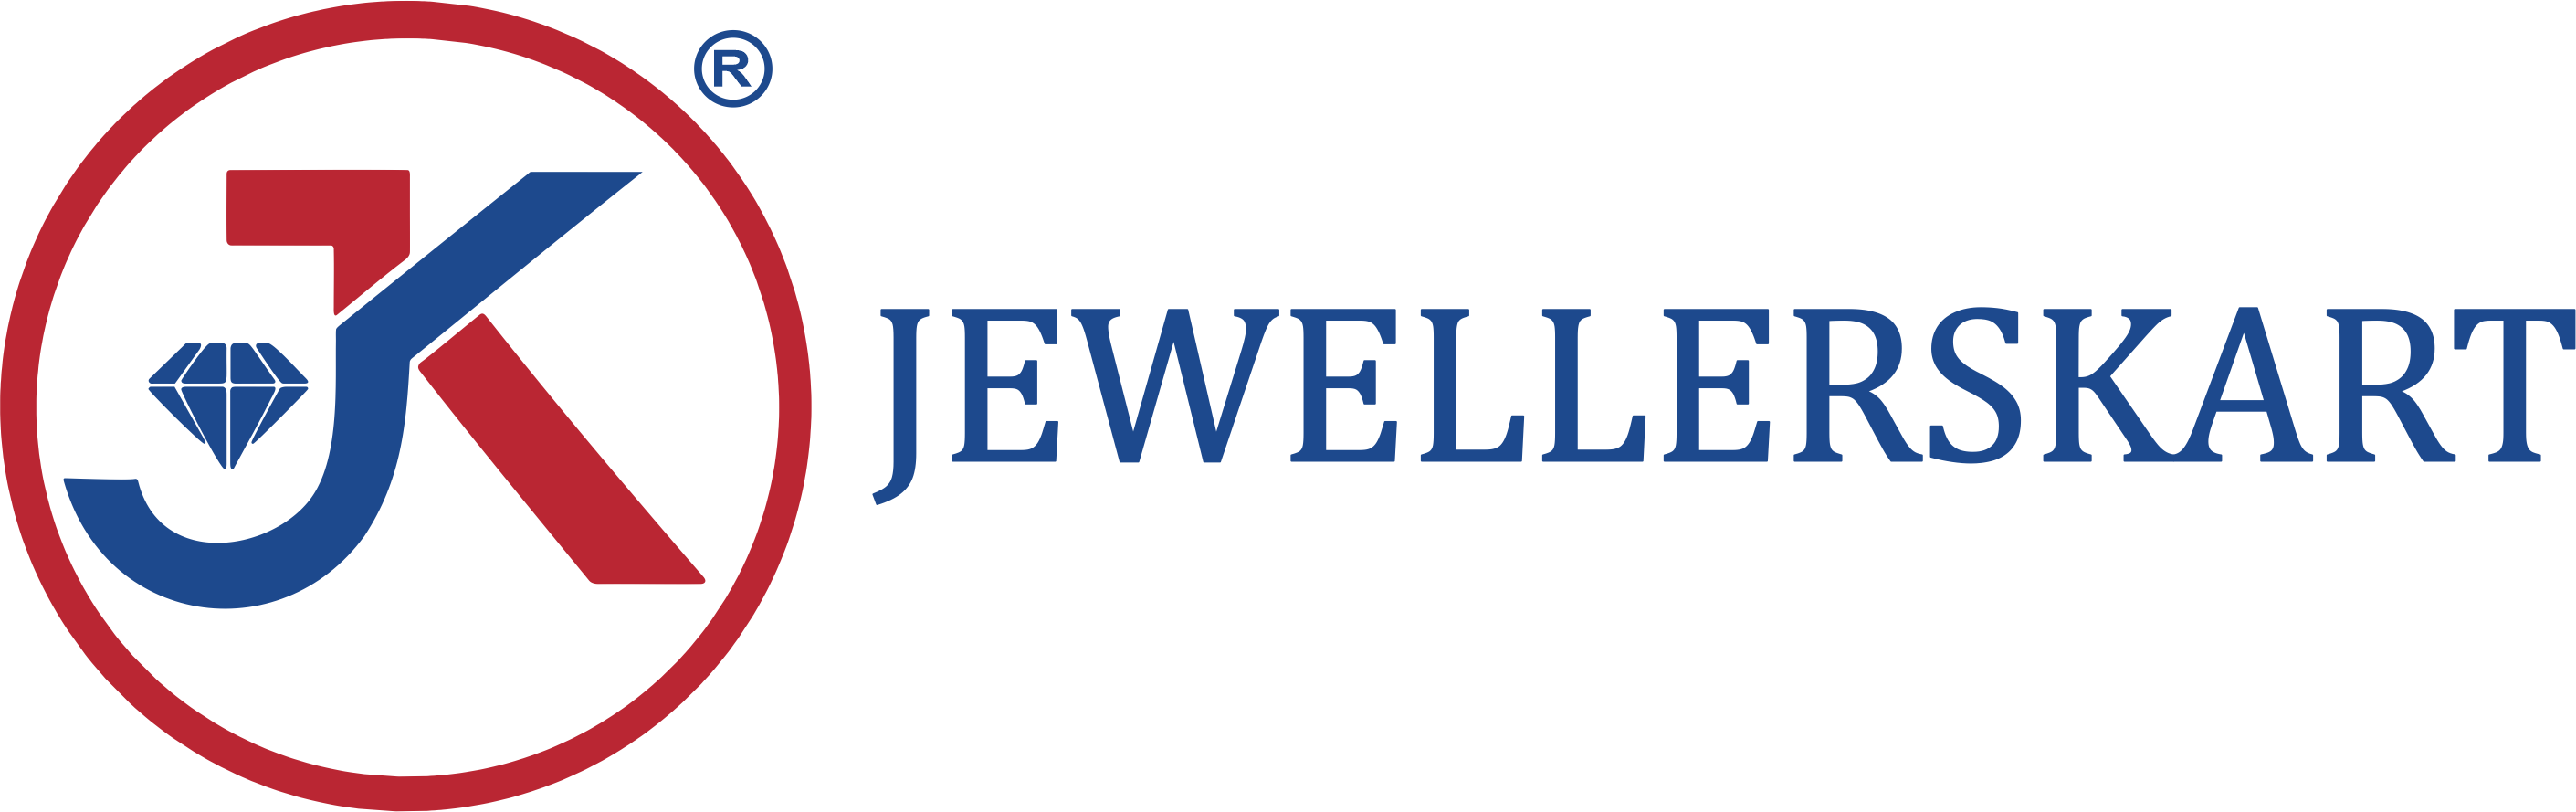 Jewellerskart Tutorial